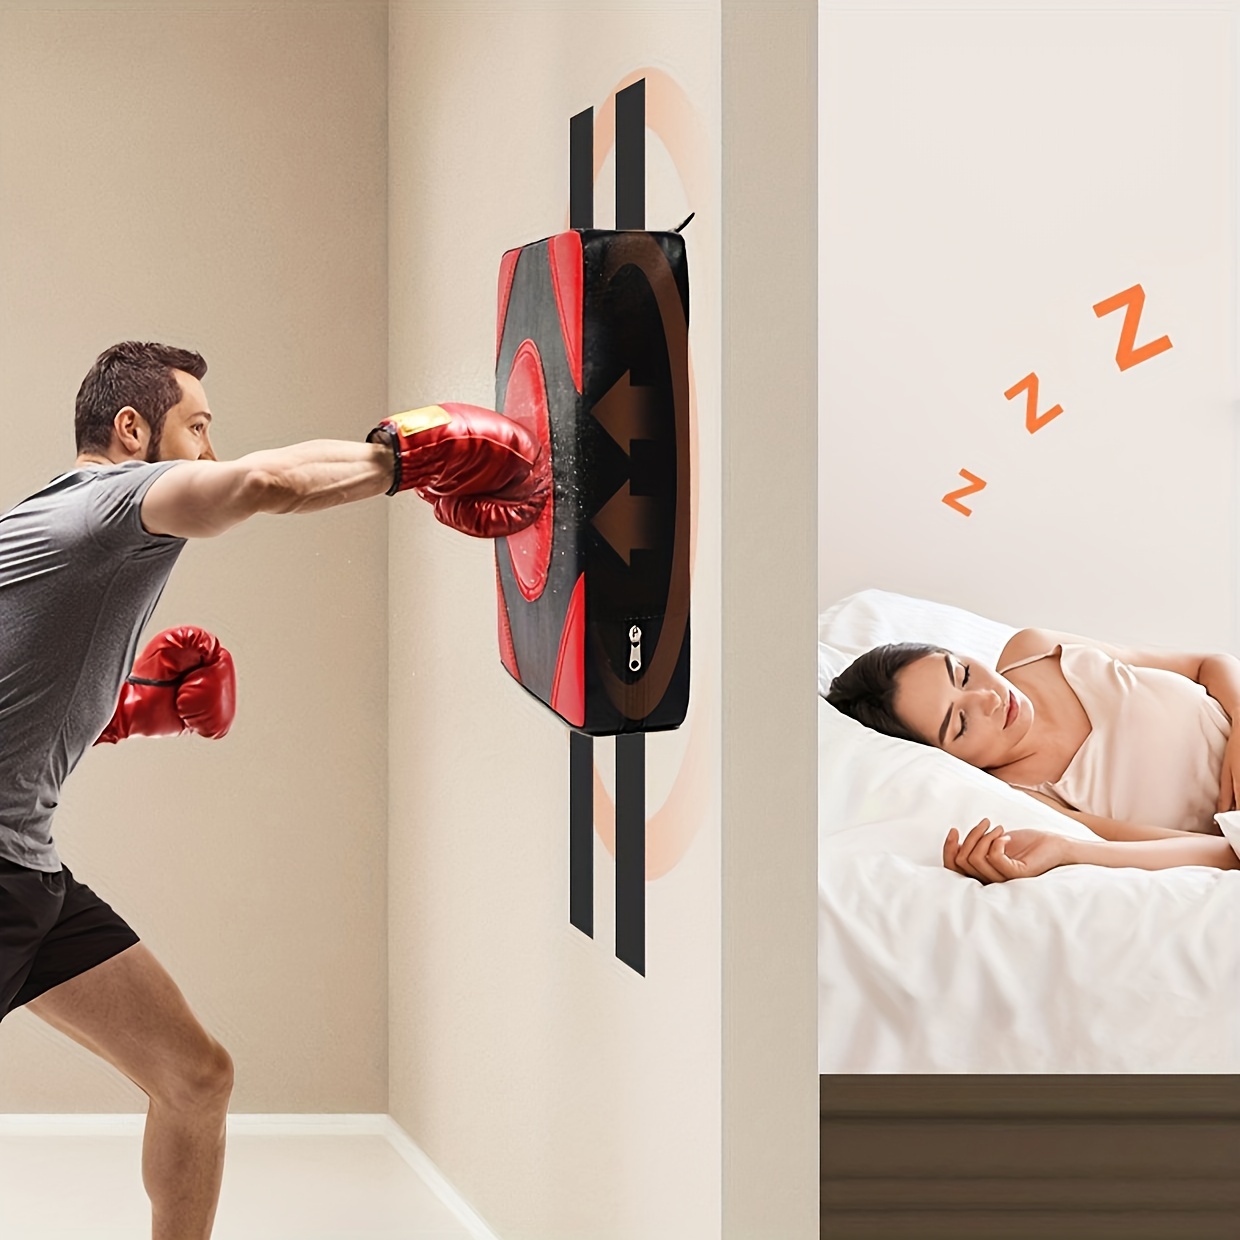 Punching Balls Music Boxing Machine Boxing Training Wall Target